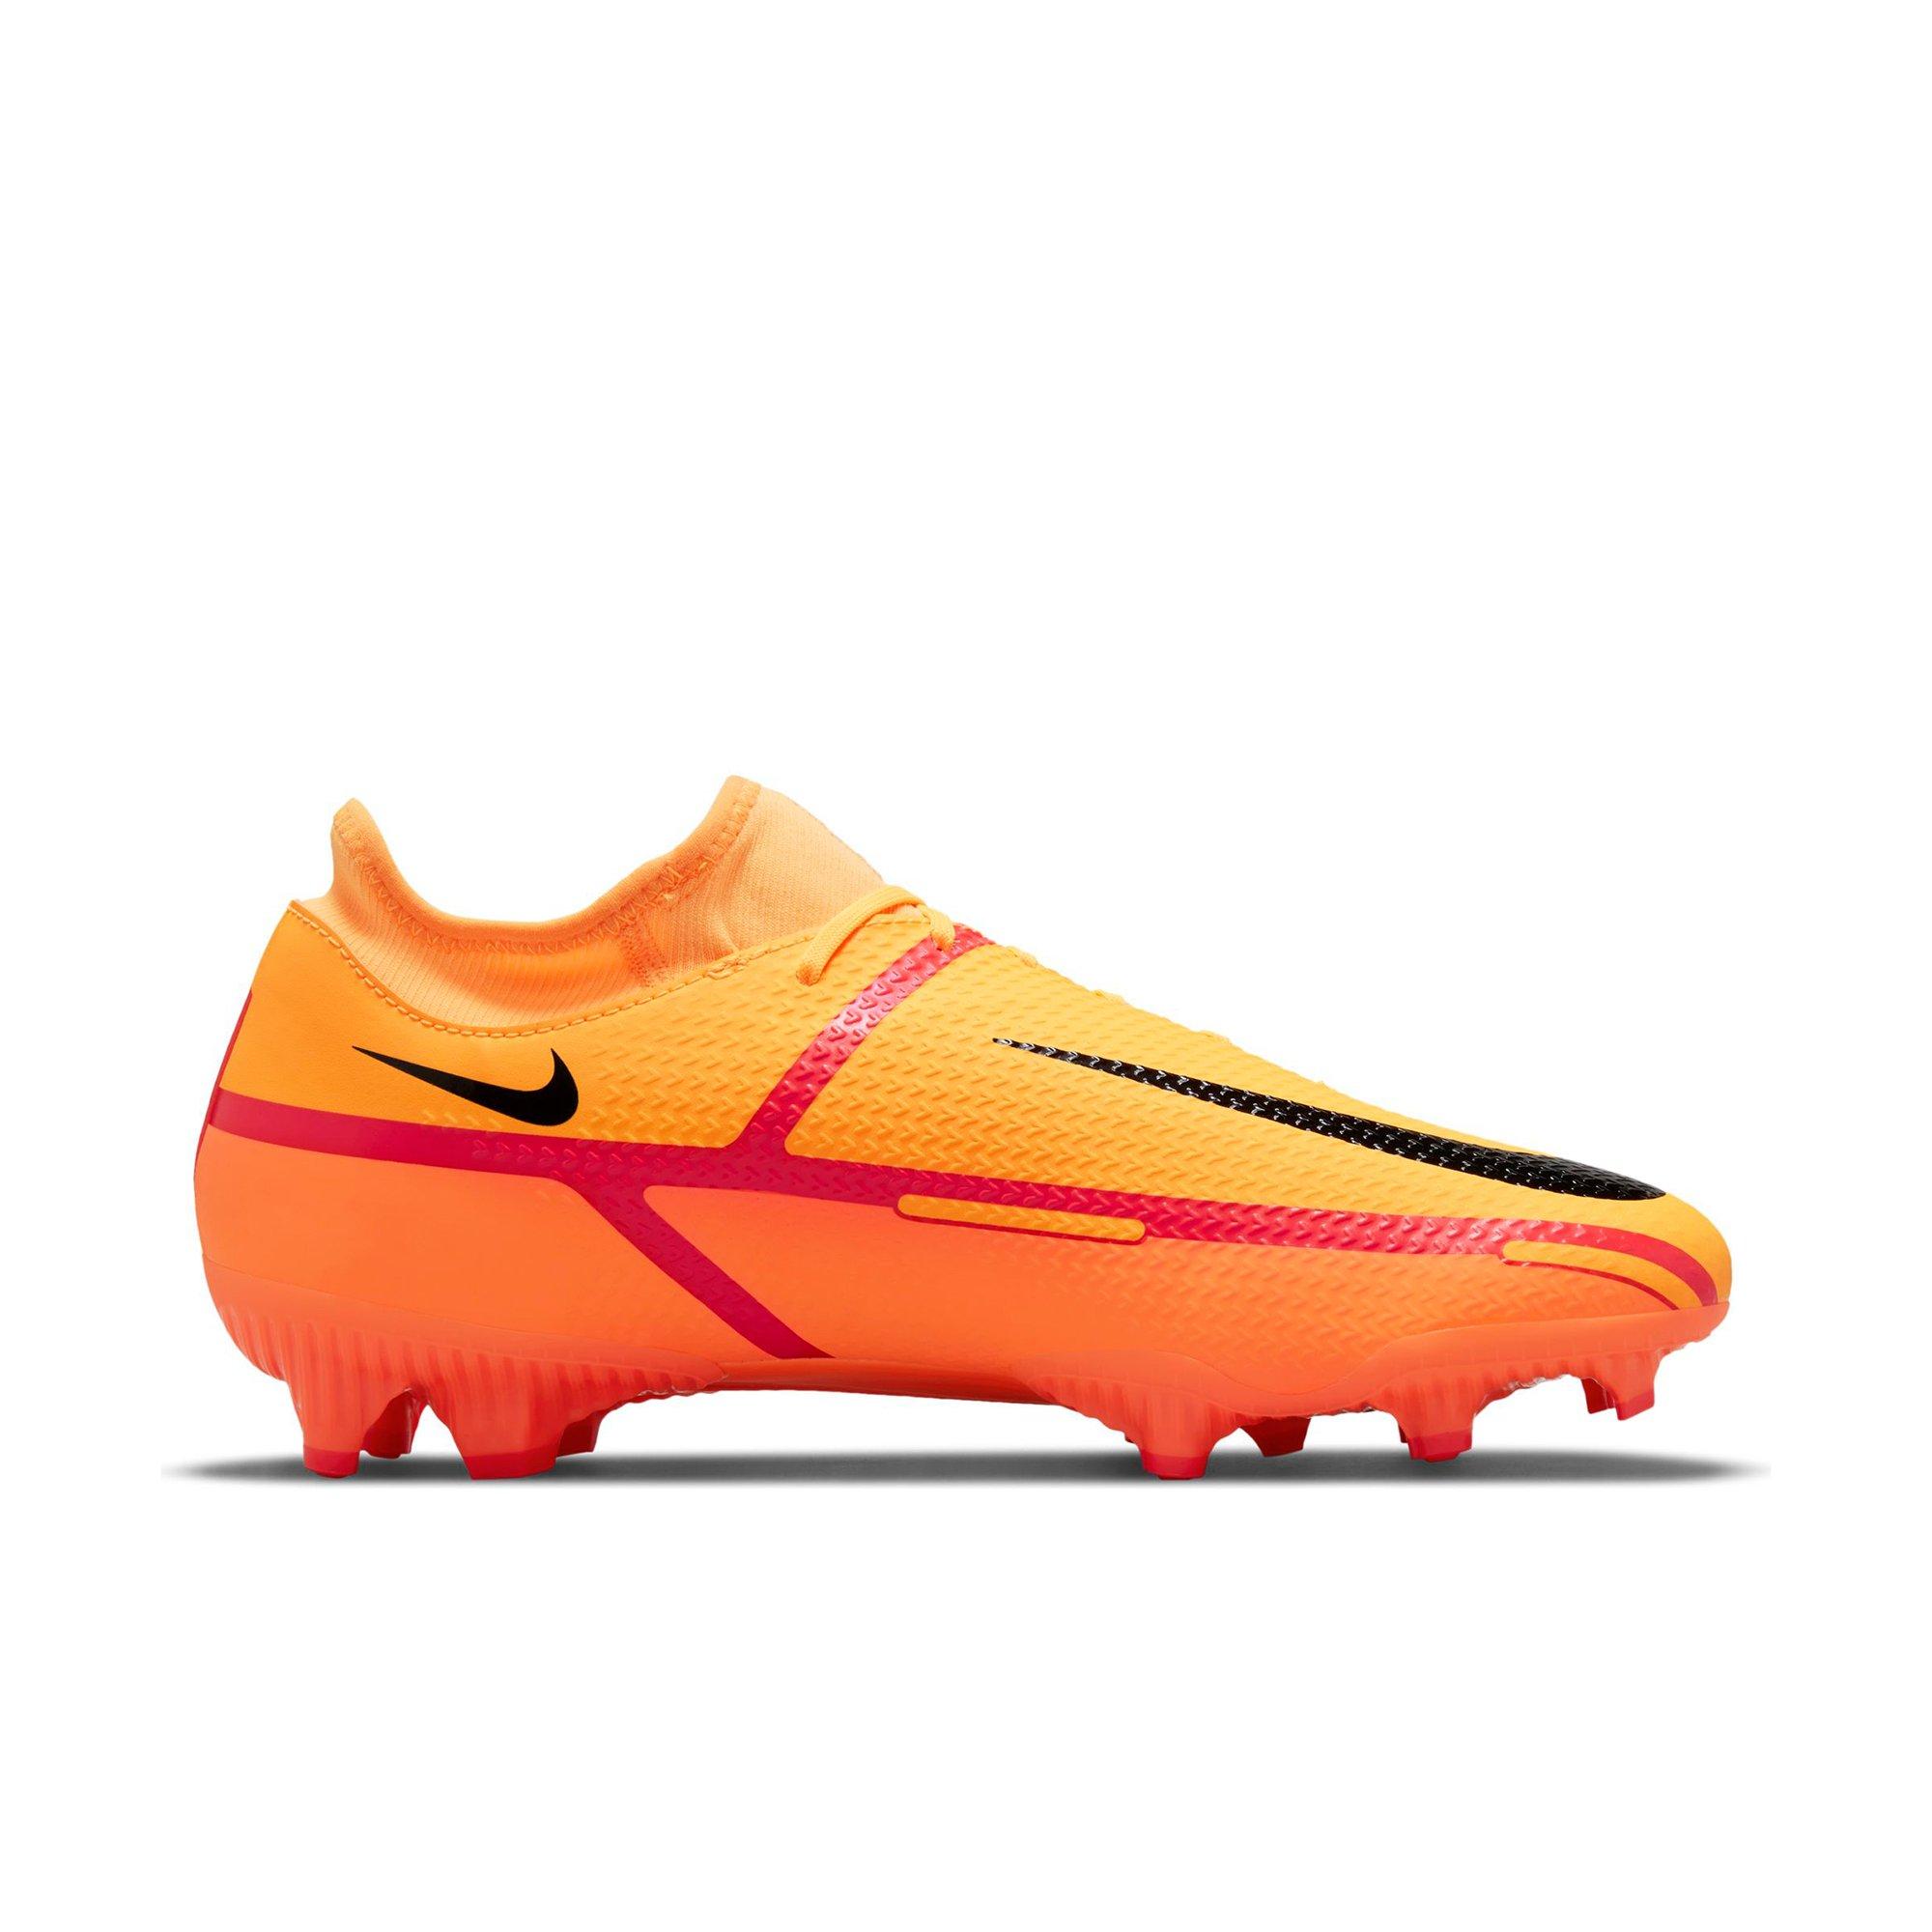 Nike GT2 Academy Dynamic Fit MG "Laser Orange/Black" Men's Soccer Cleat